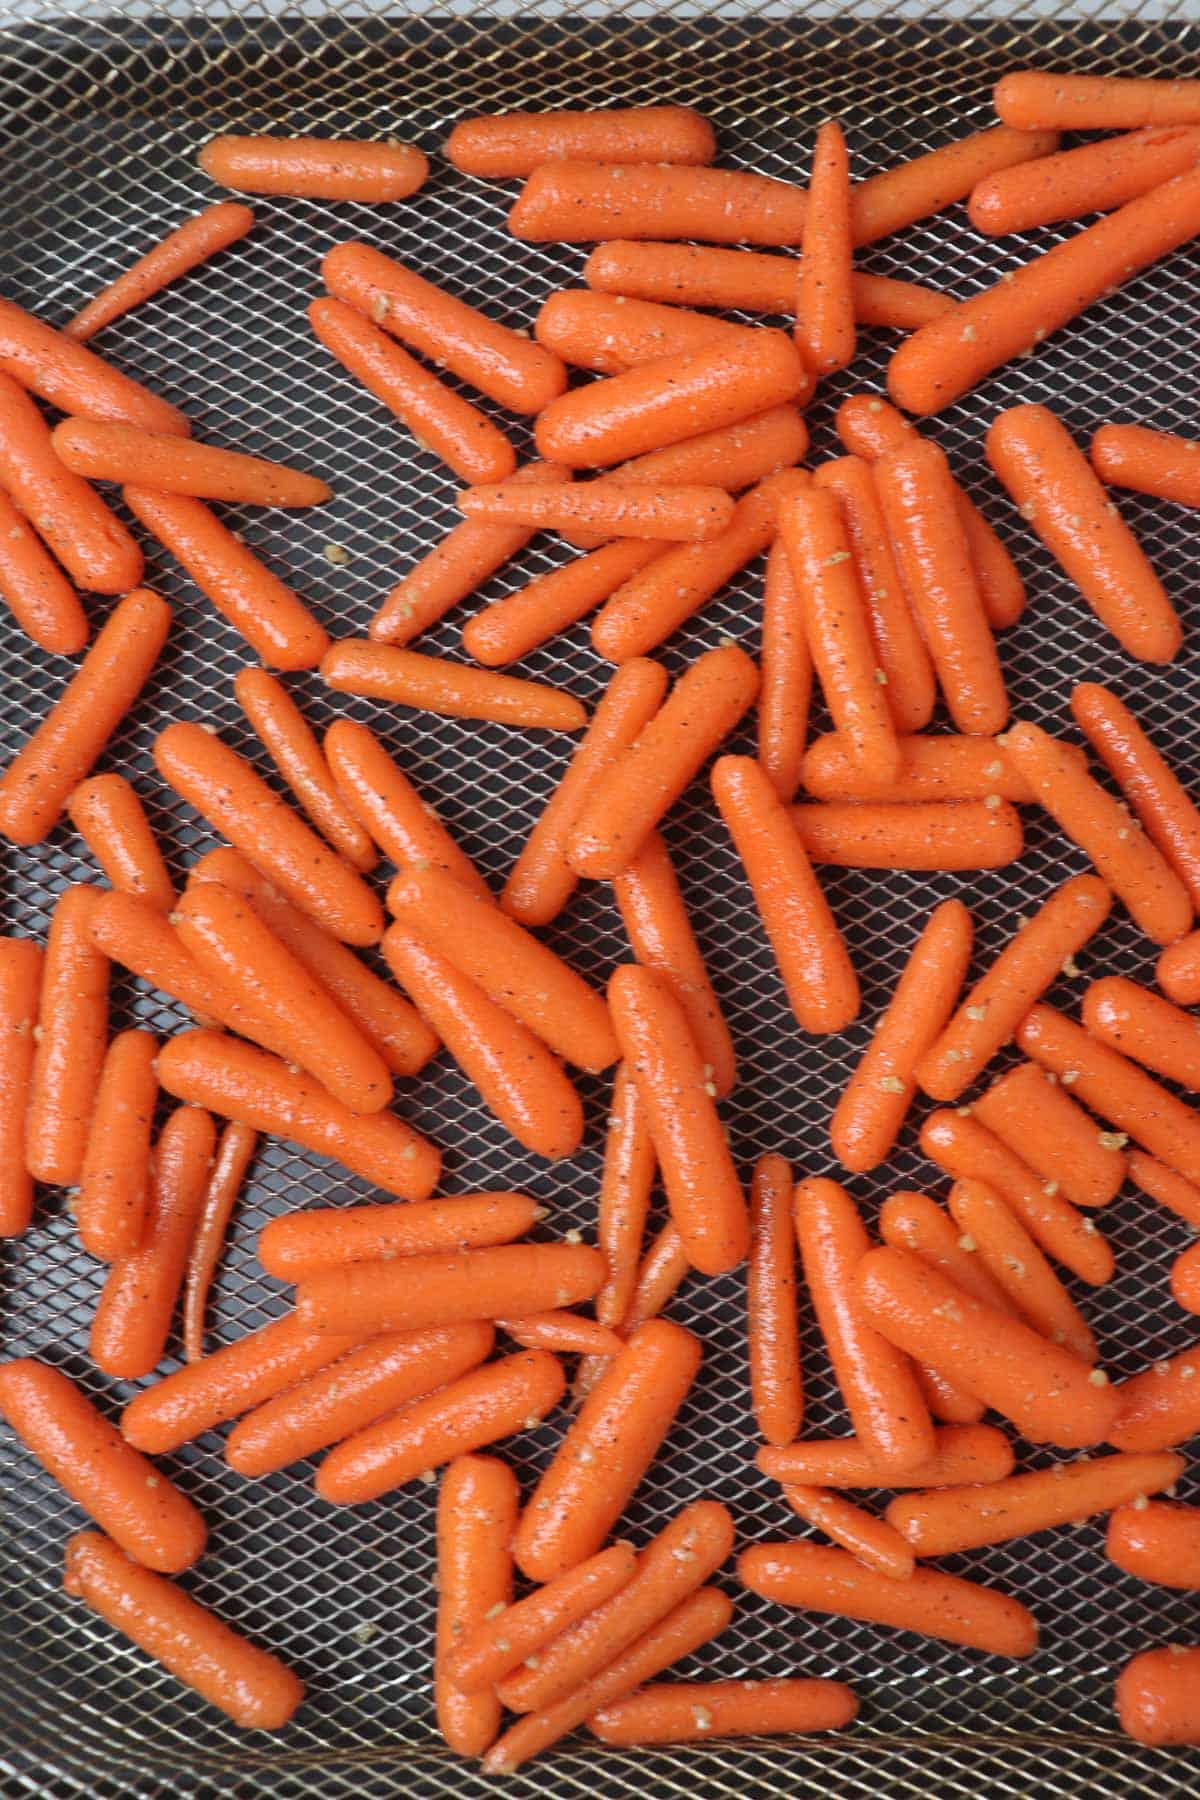 uncooked baby carrots in air fryer basket